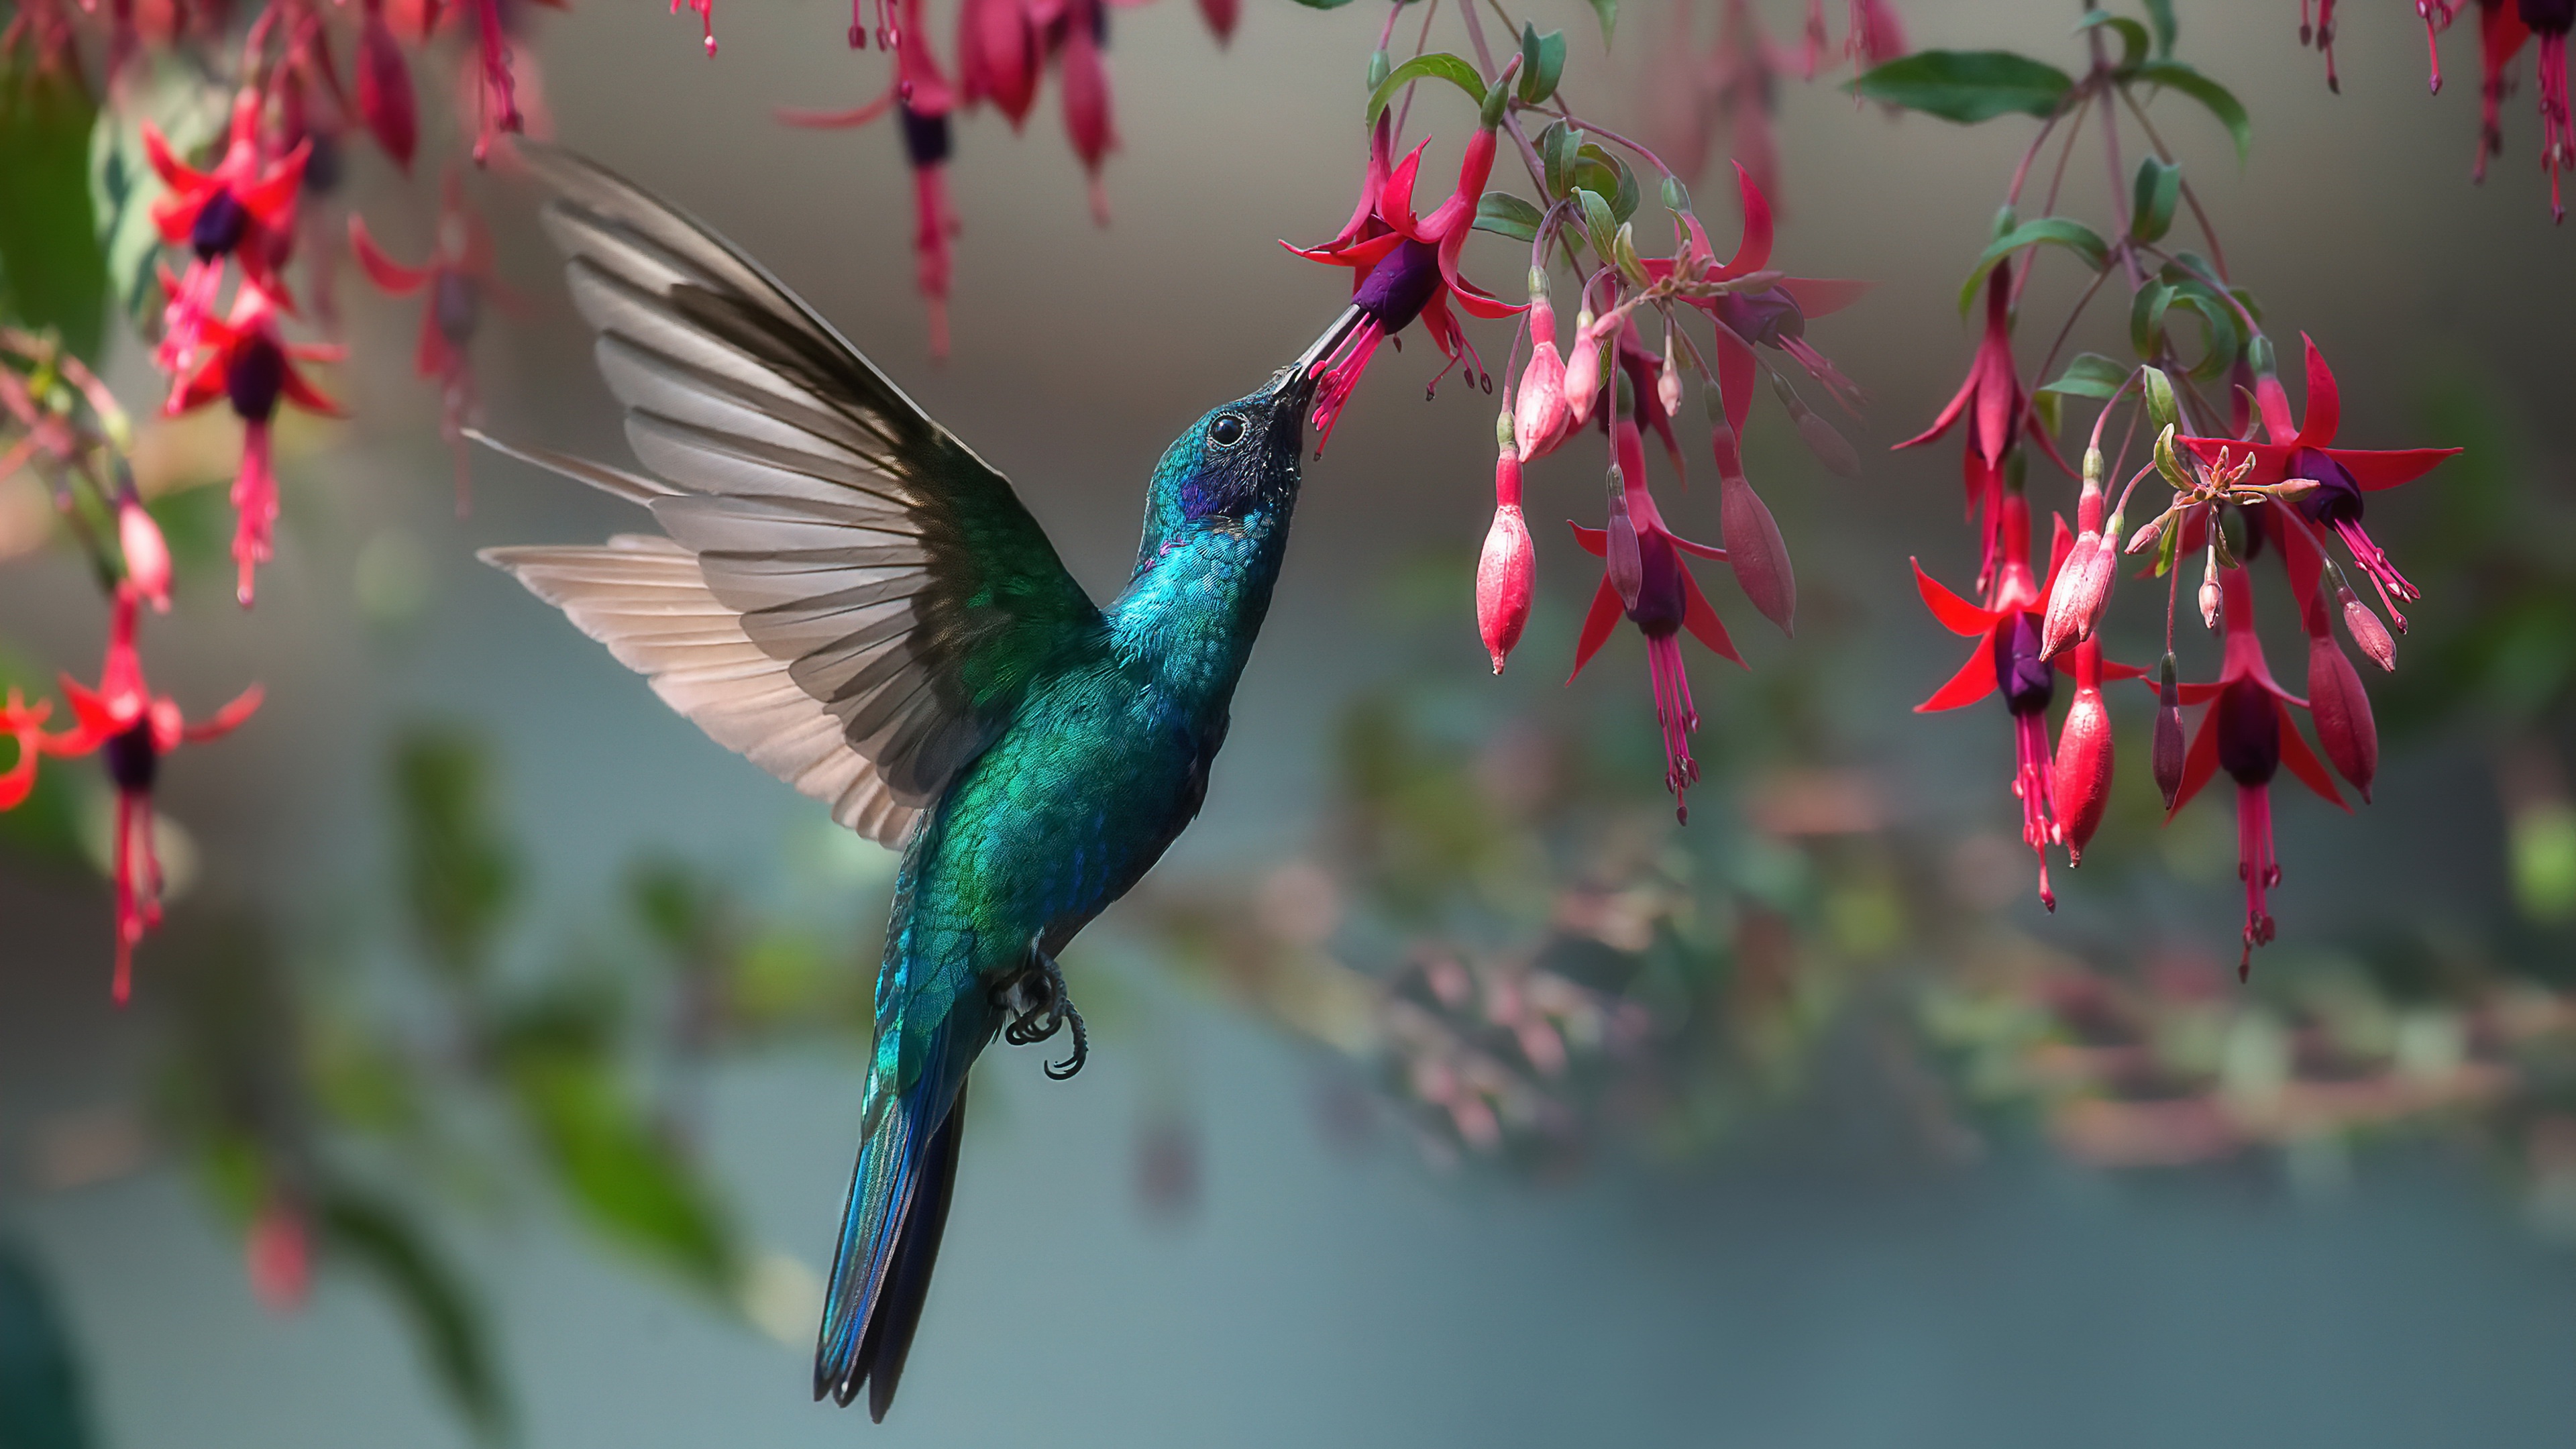 486827 descargar imagen animales, colibrí, ave, flor, fucsia, aves: fondos de pantalla y protectores de pantalla gratis